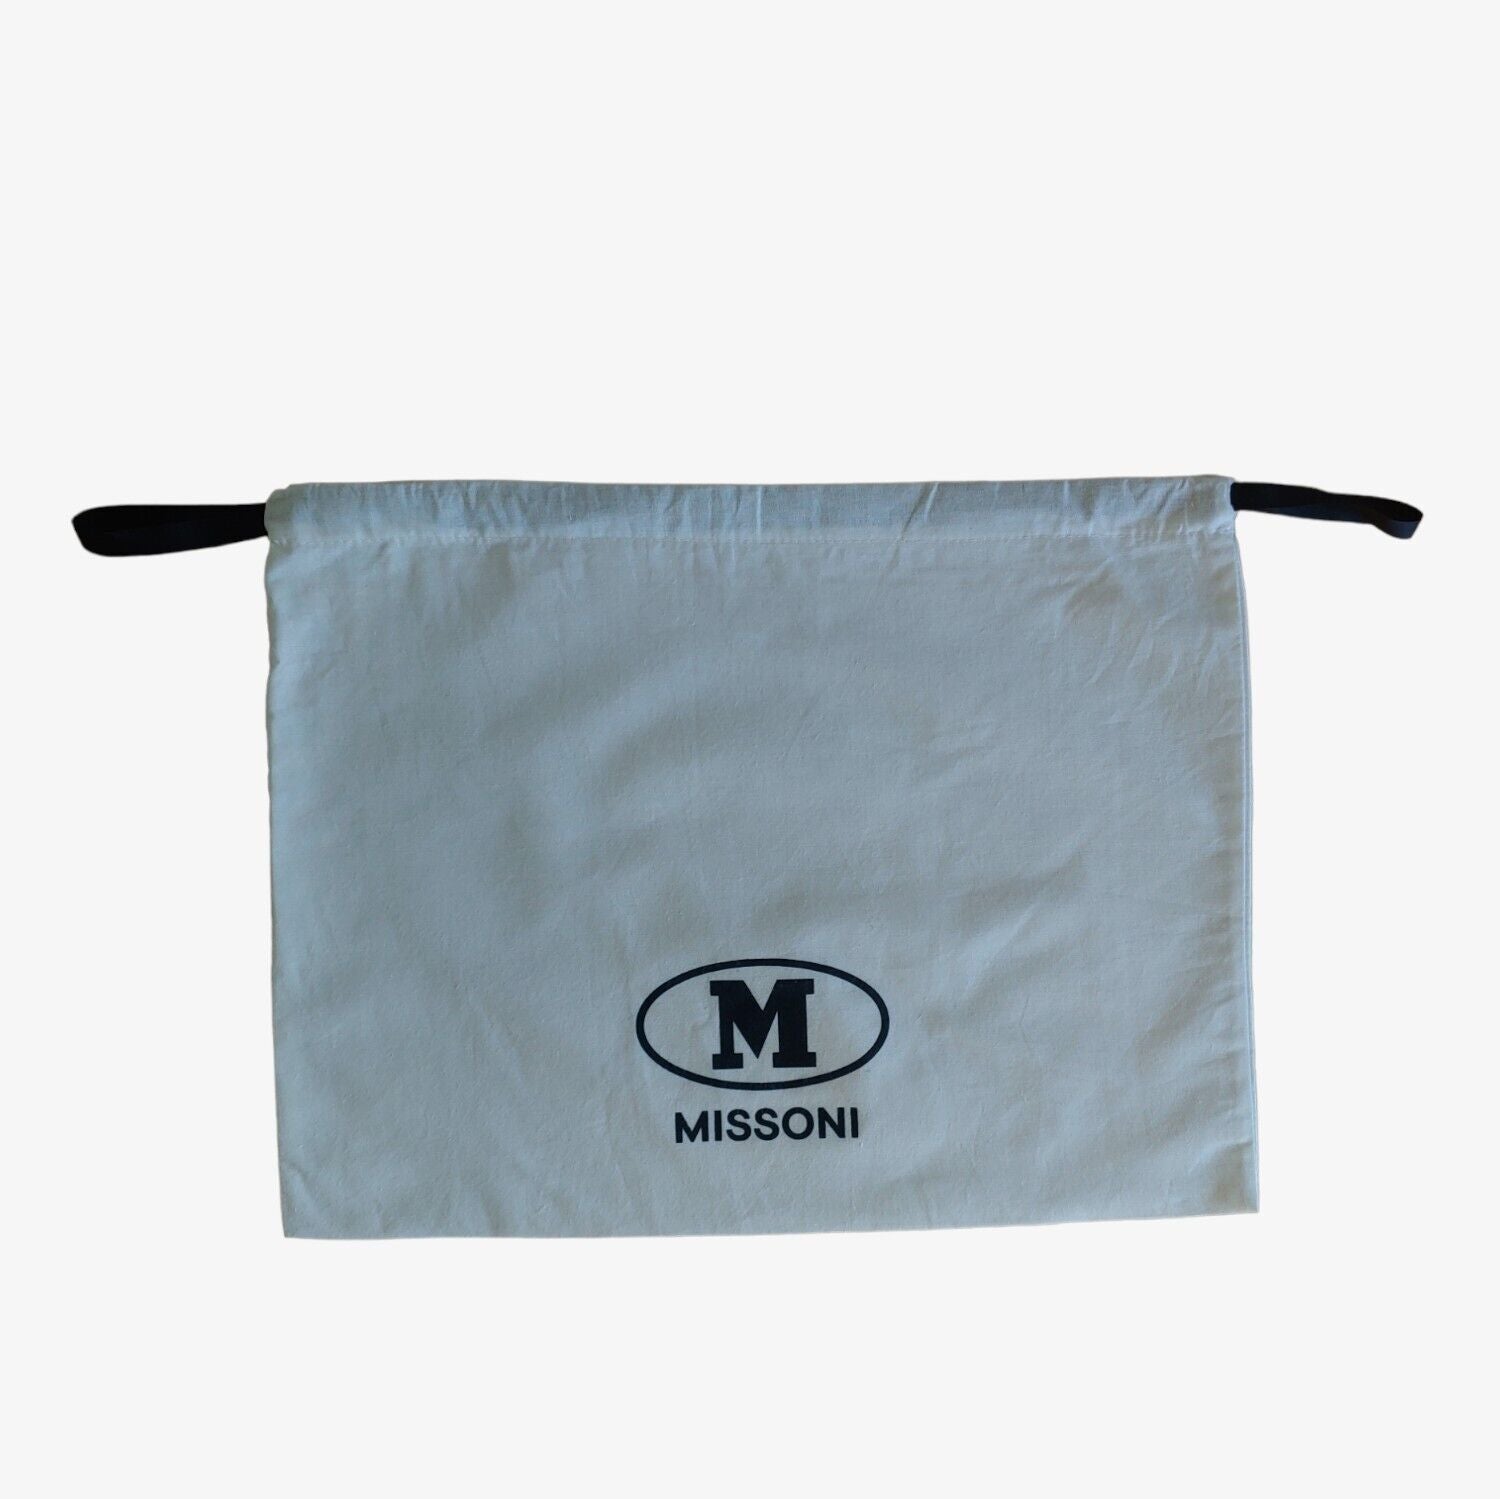 Missoni Raffia Woven Bucket Bag With Scarf Handles Dust Bag_Casspios Dream